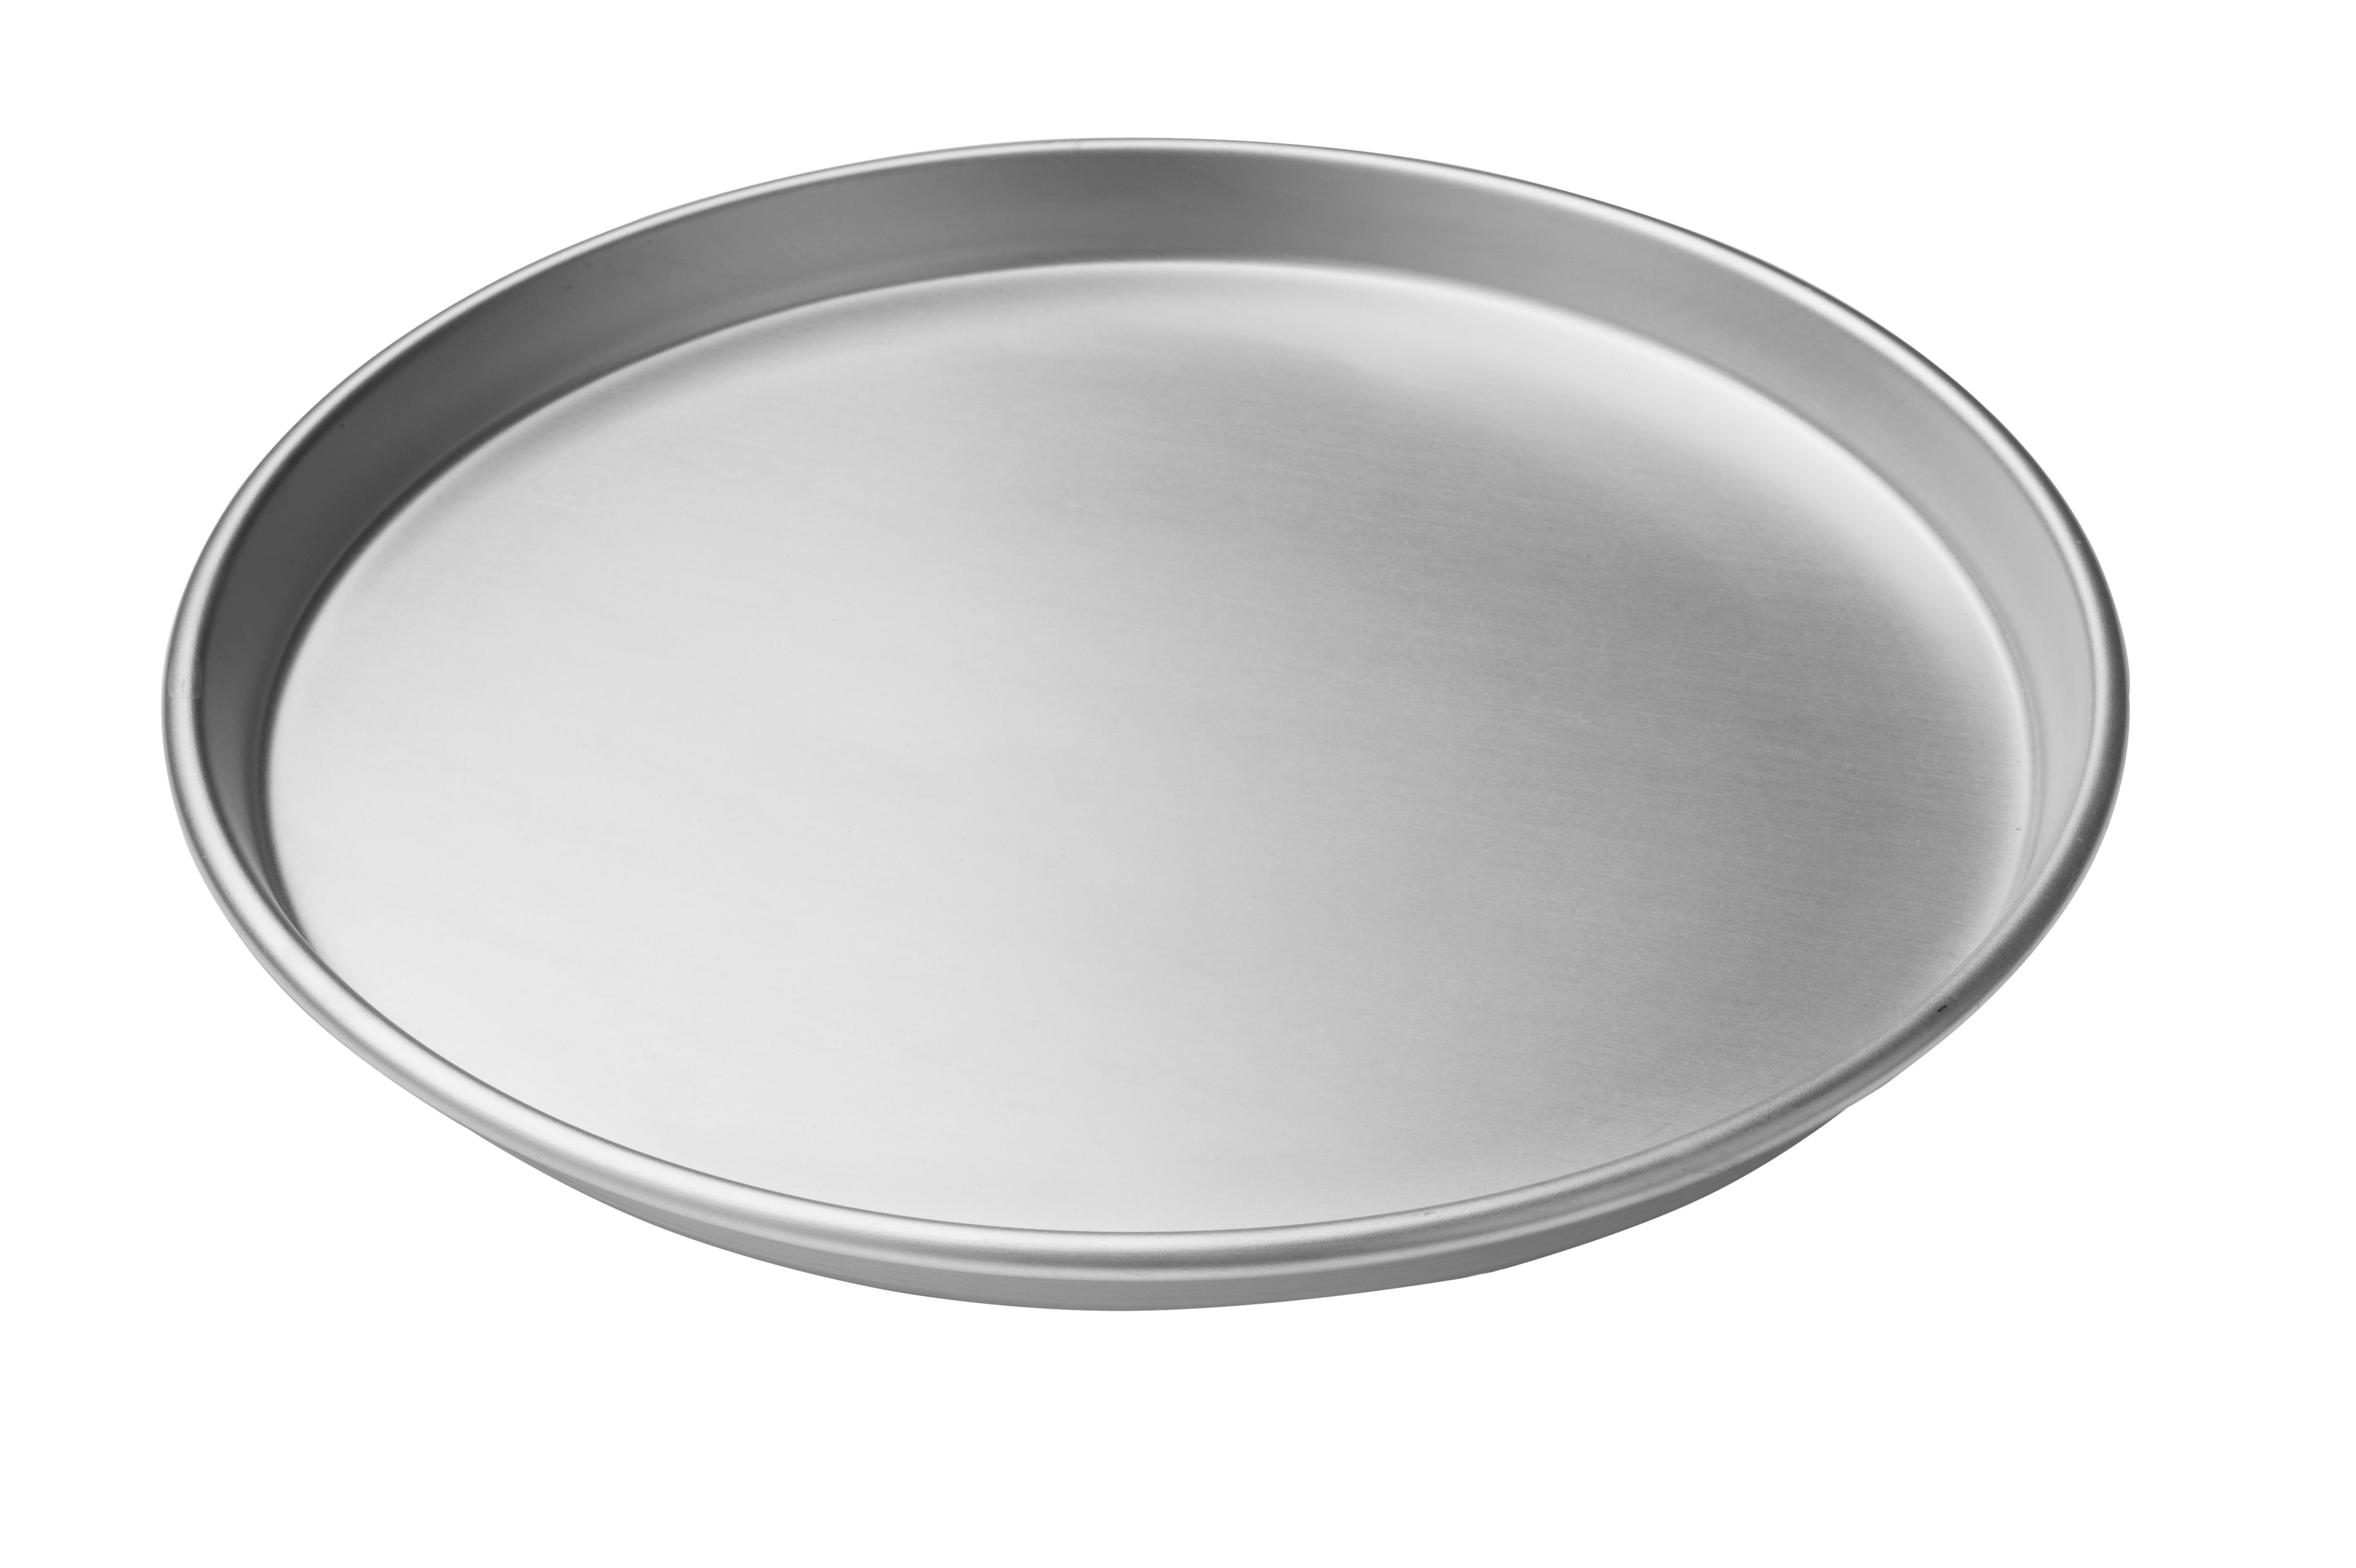 Pizzablech  Aluminium  rund  Durchmesser 33 cm  H 3 cm